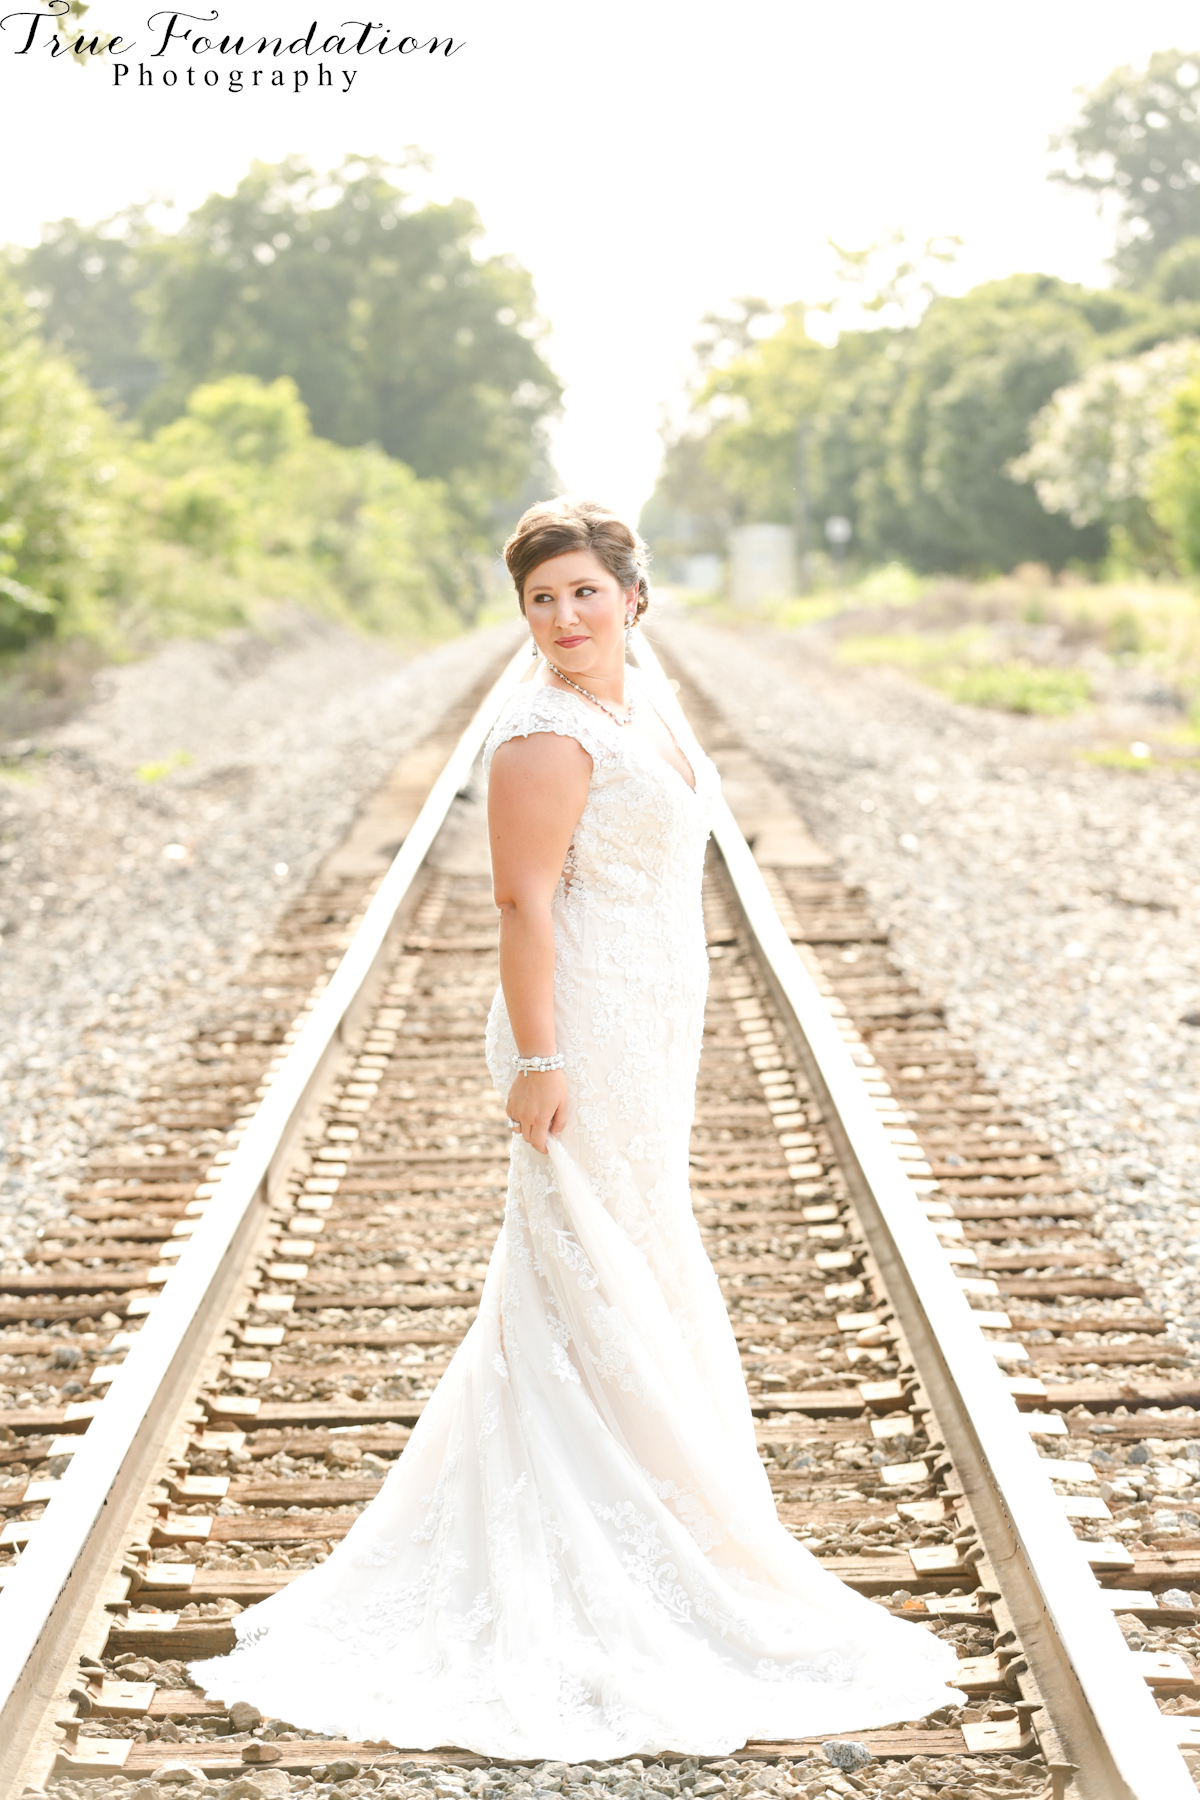 Bridal - Portrait - Photography - Photos - Hendersonville - NC - Shelby - Photographers - Farm - Country - Pinterest - Bride (33)